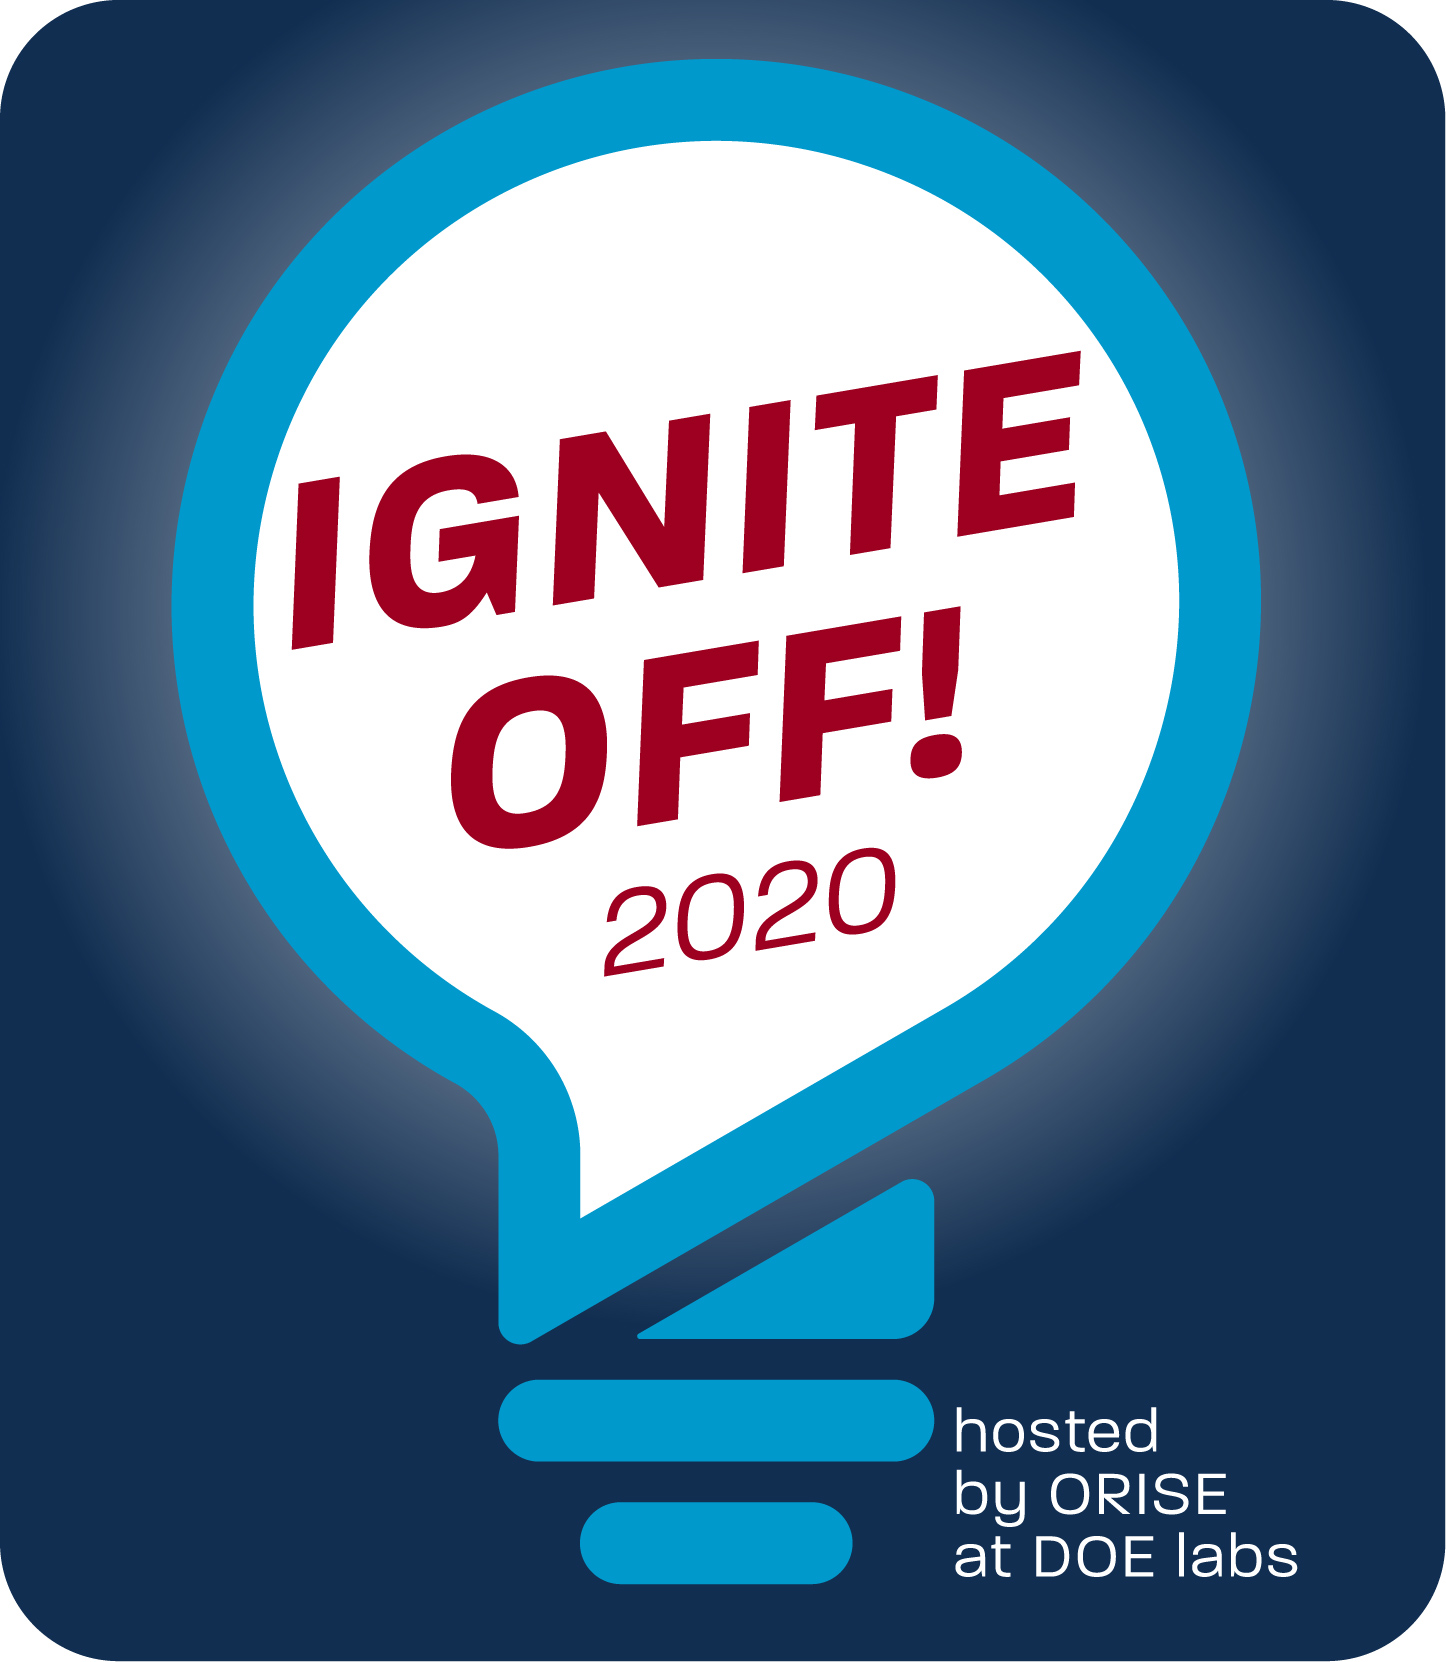 Ignite Off 2020 logo